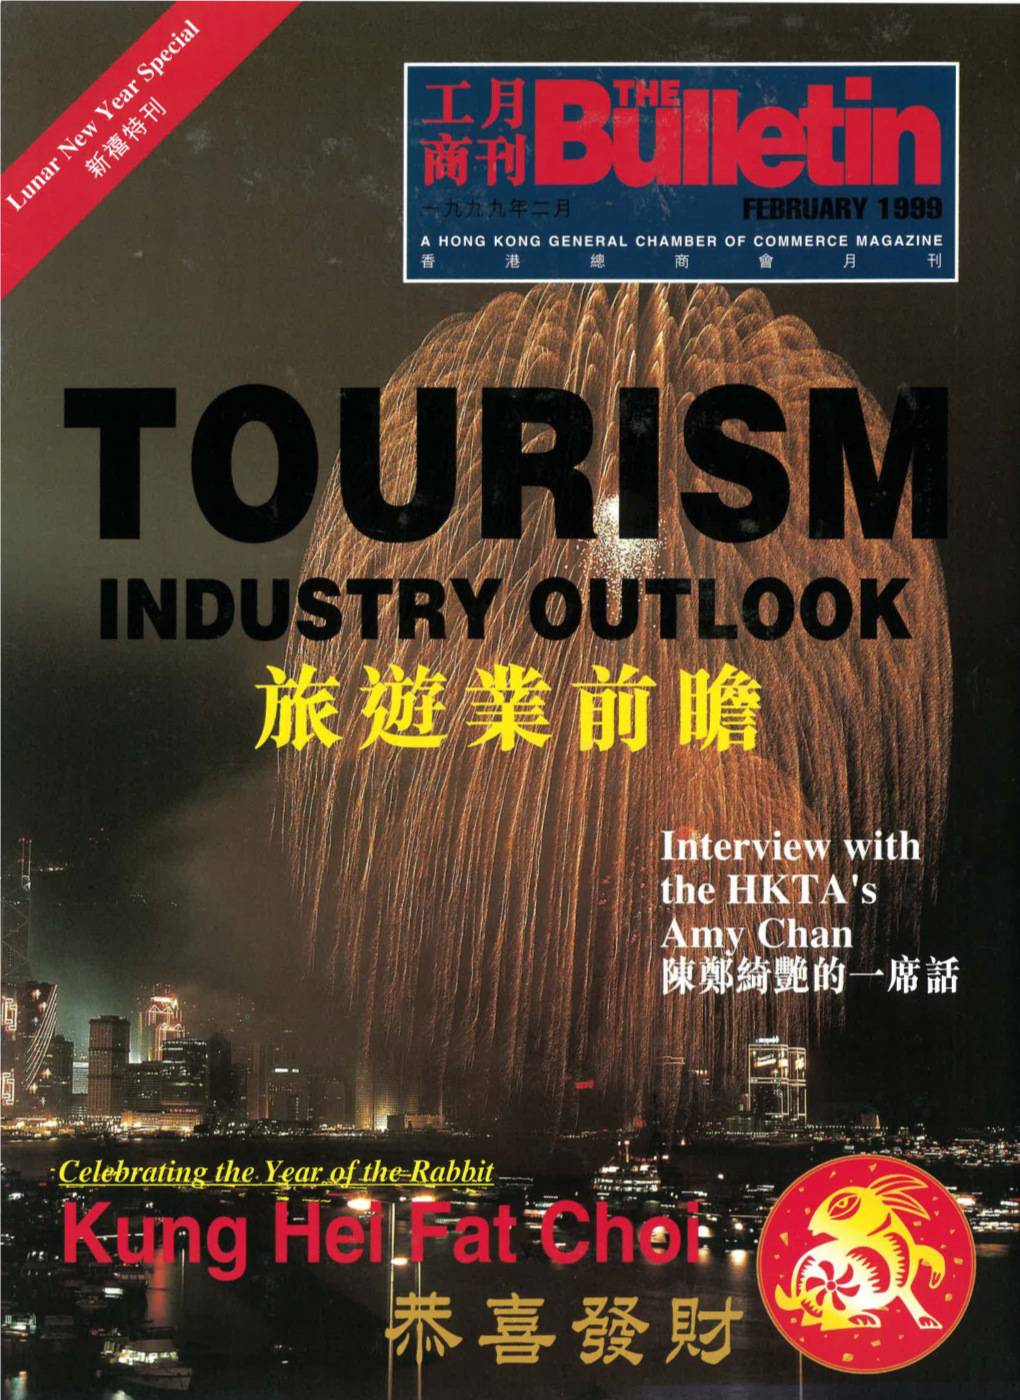 FEBRUARY 1999 a Hong Kong General Chamber of Commerce Magazine